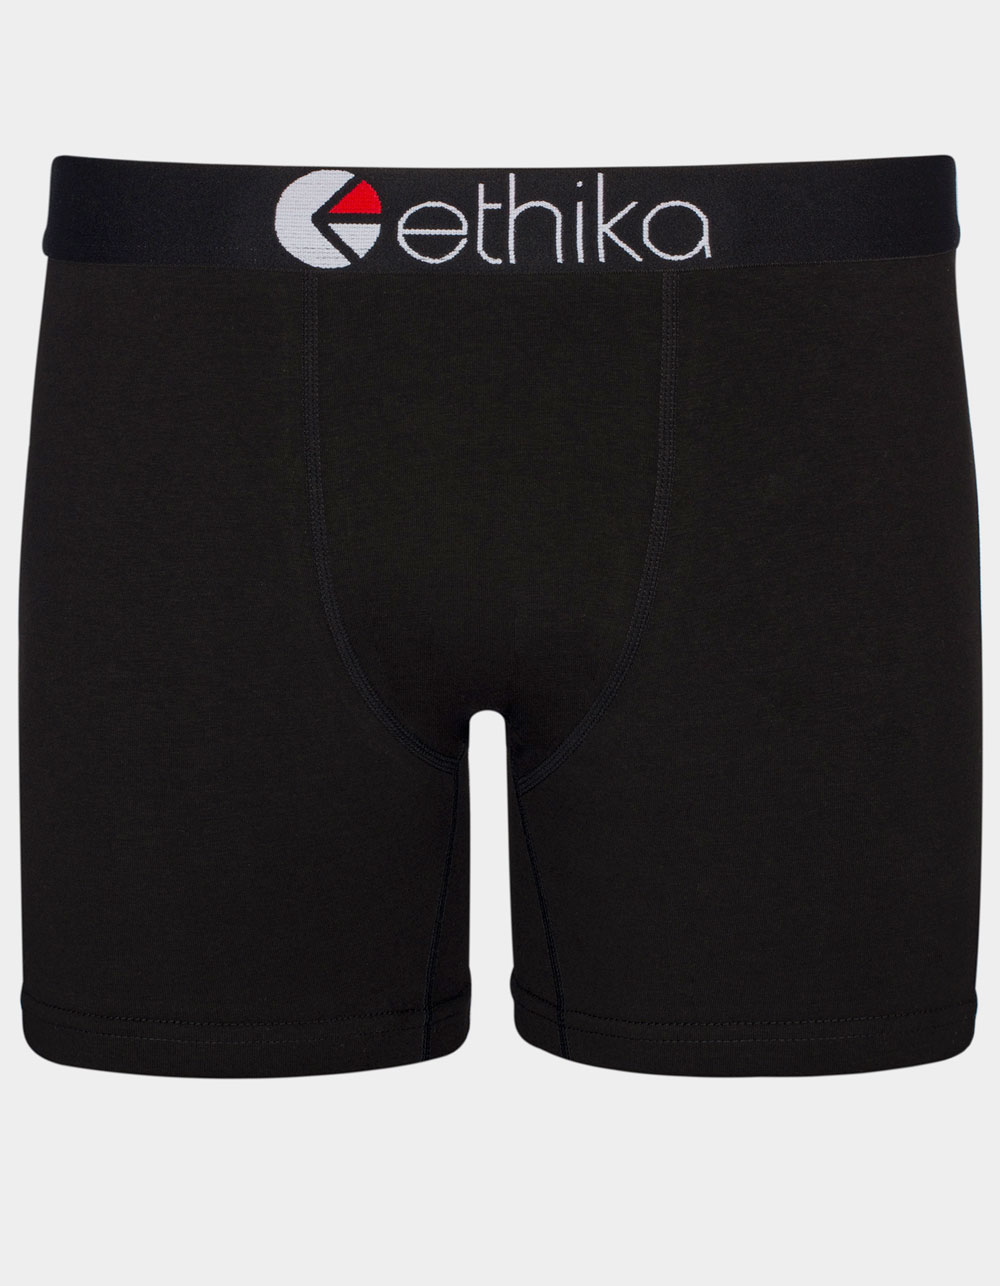 Ethika Boxers & Underwear